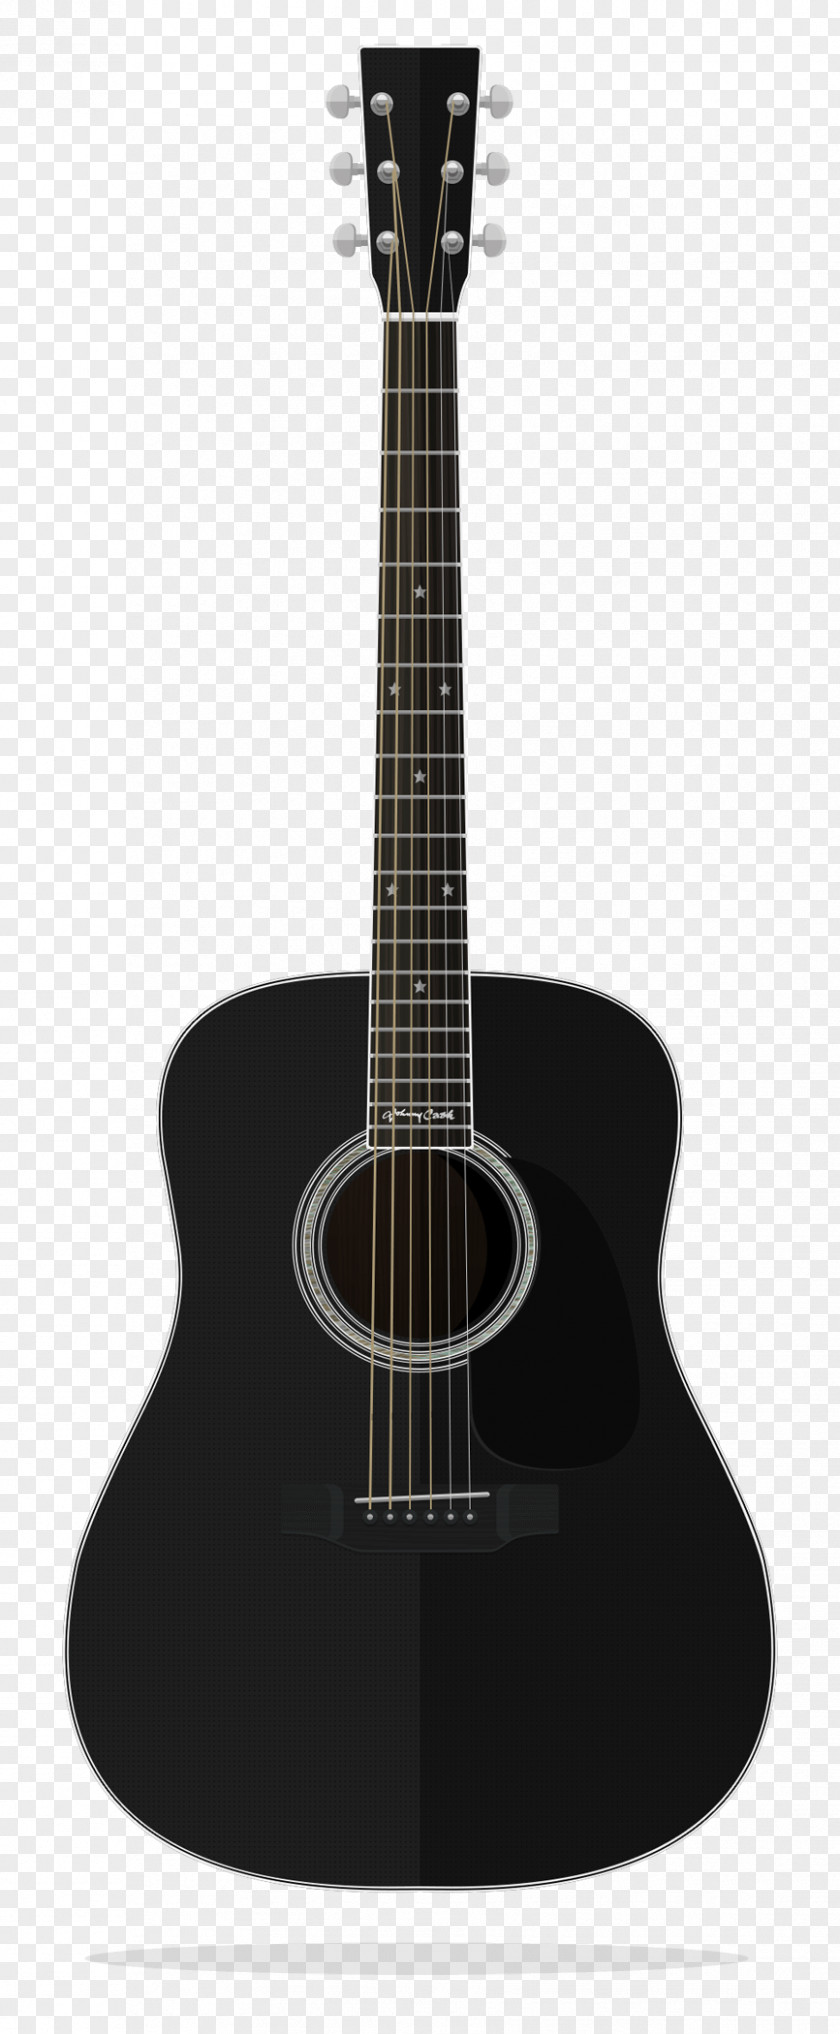 Johnny Cash Fender Stratocaster Acoustic Guitar Dreadnought String PNG